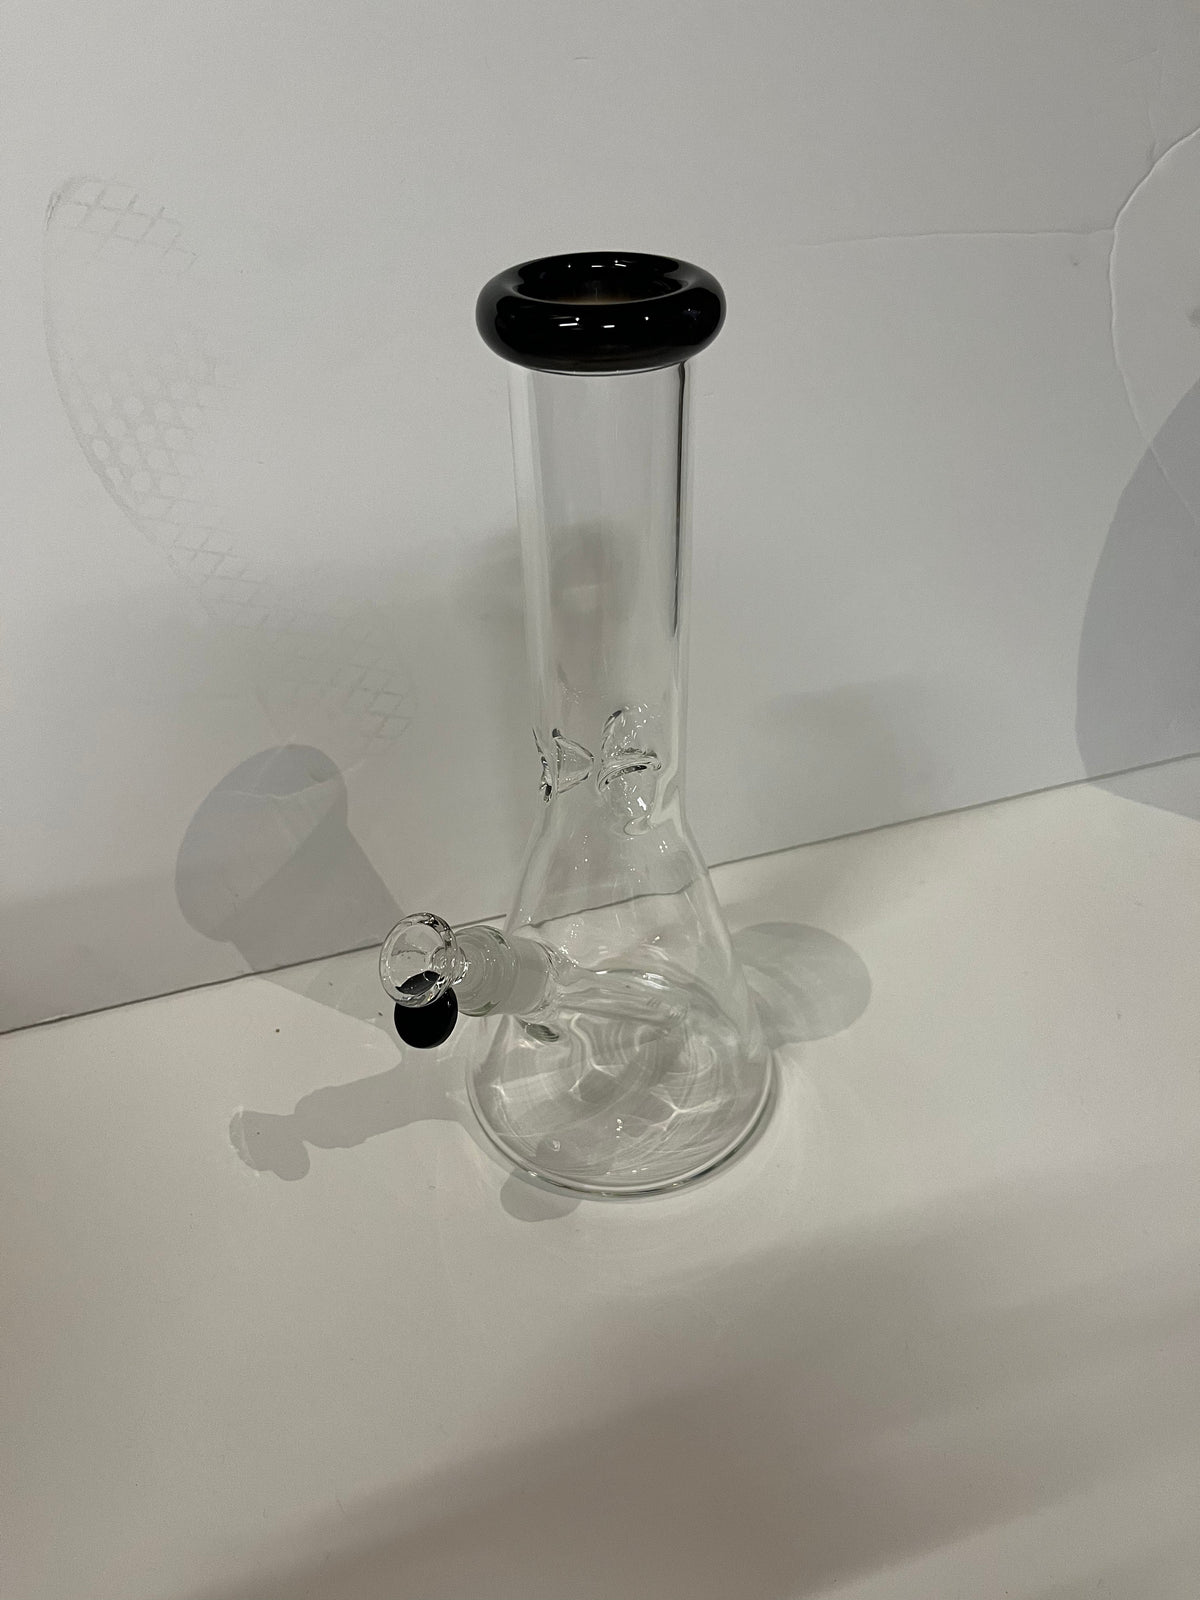 18” / 7mm - Glass Bong - "Simple & Basics"